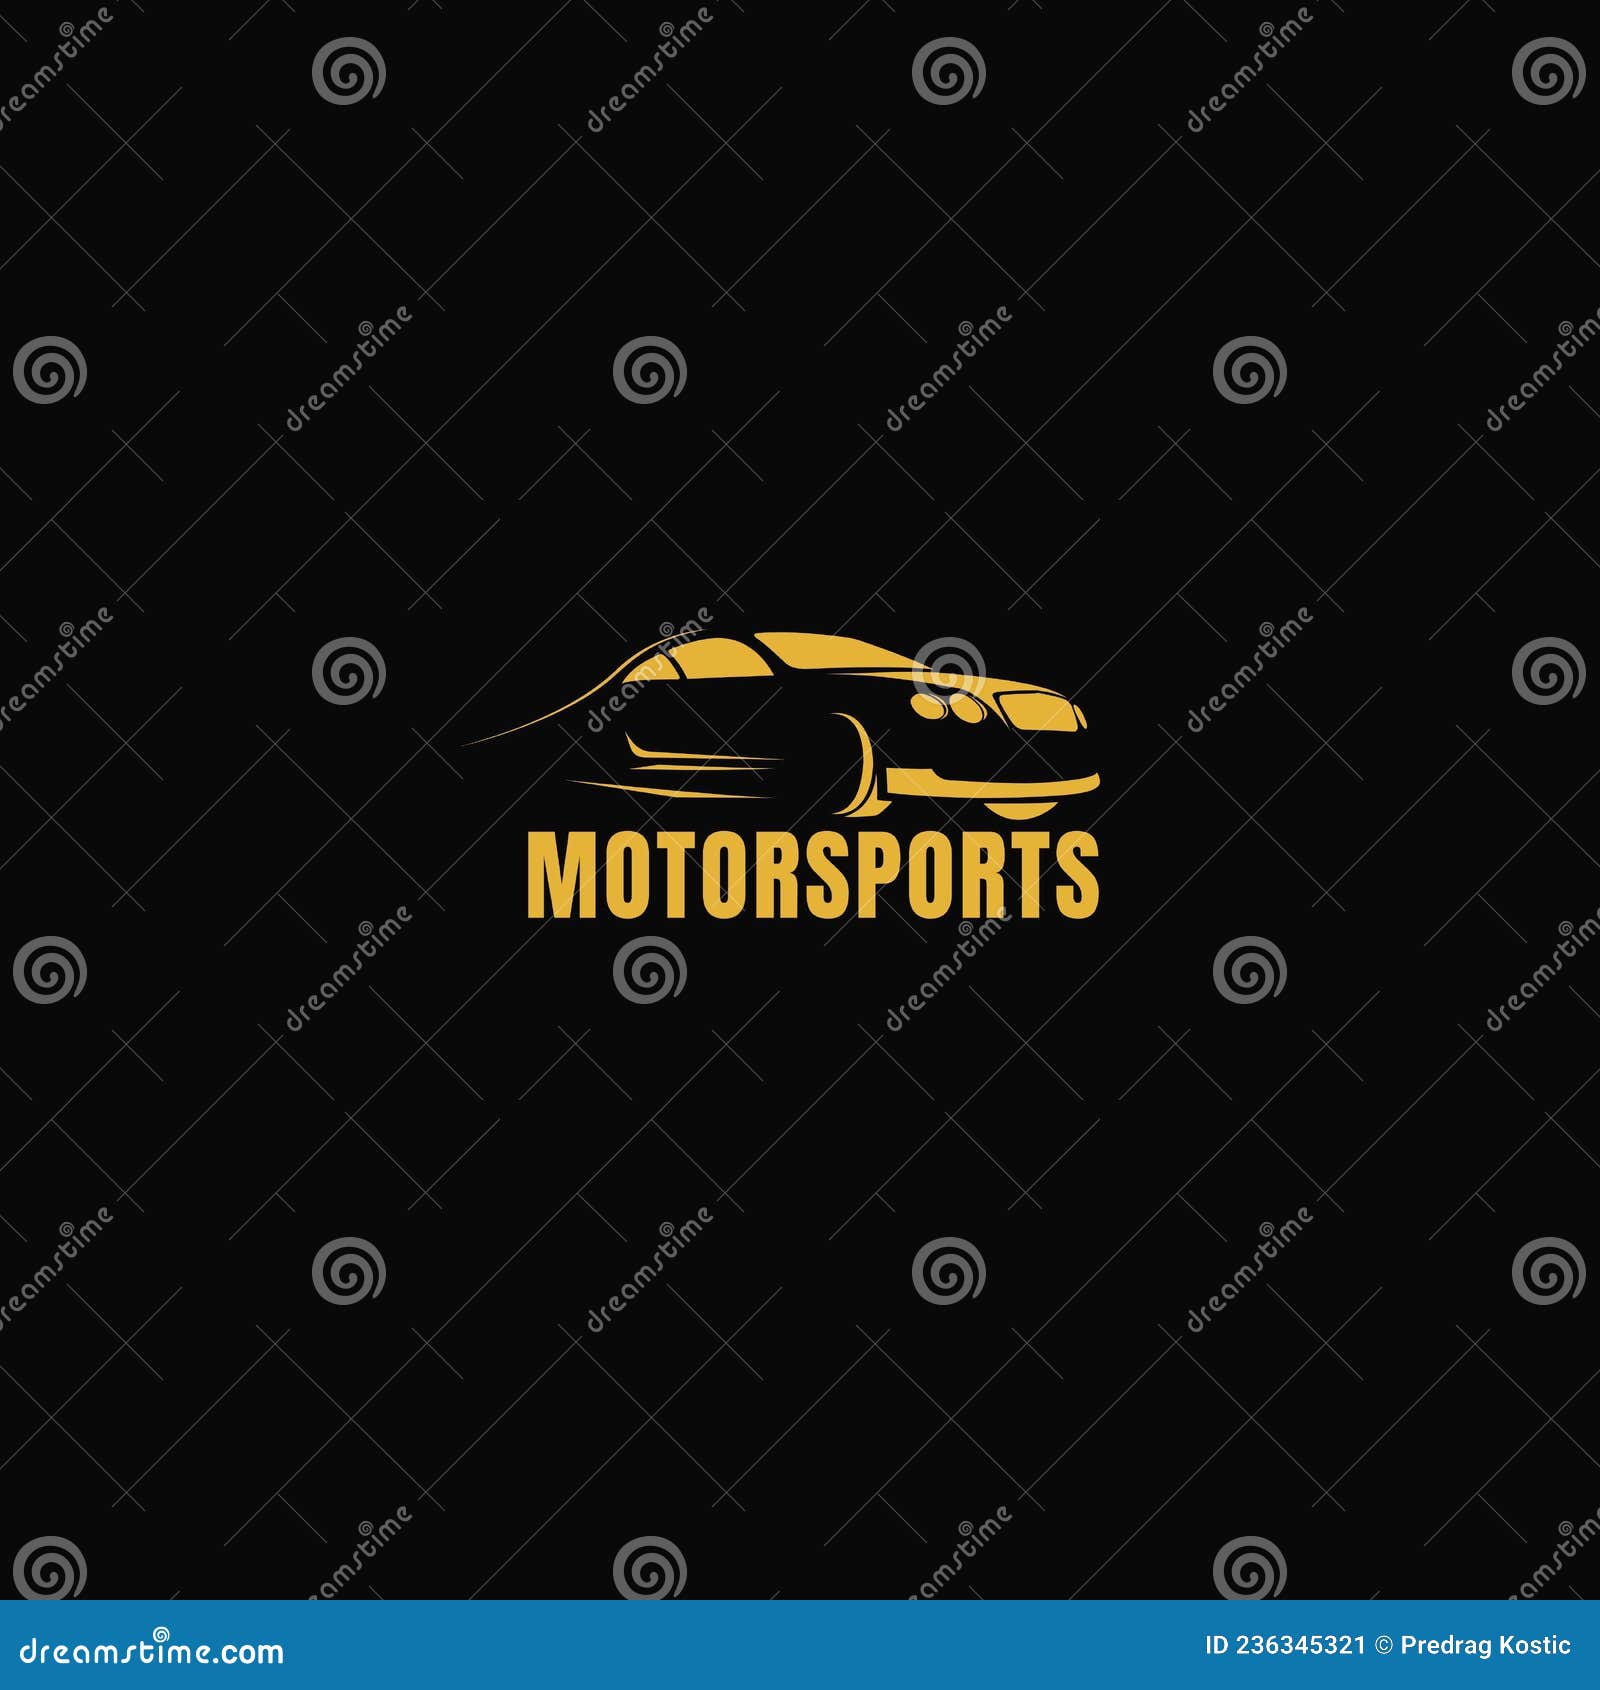 motorsports concept line icon.